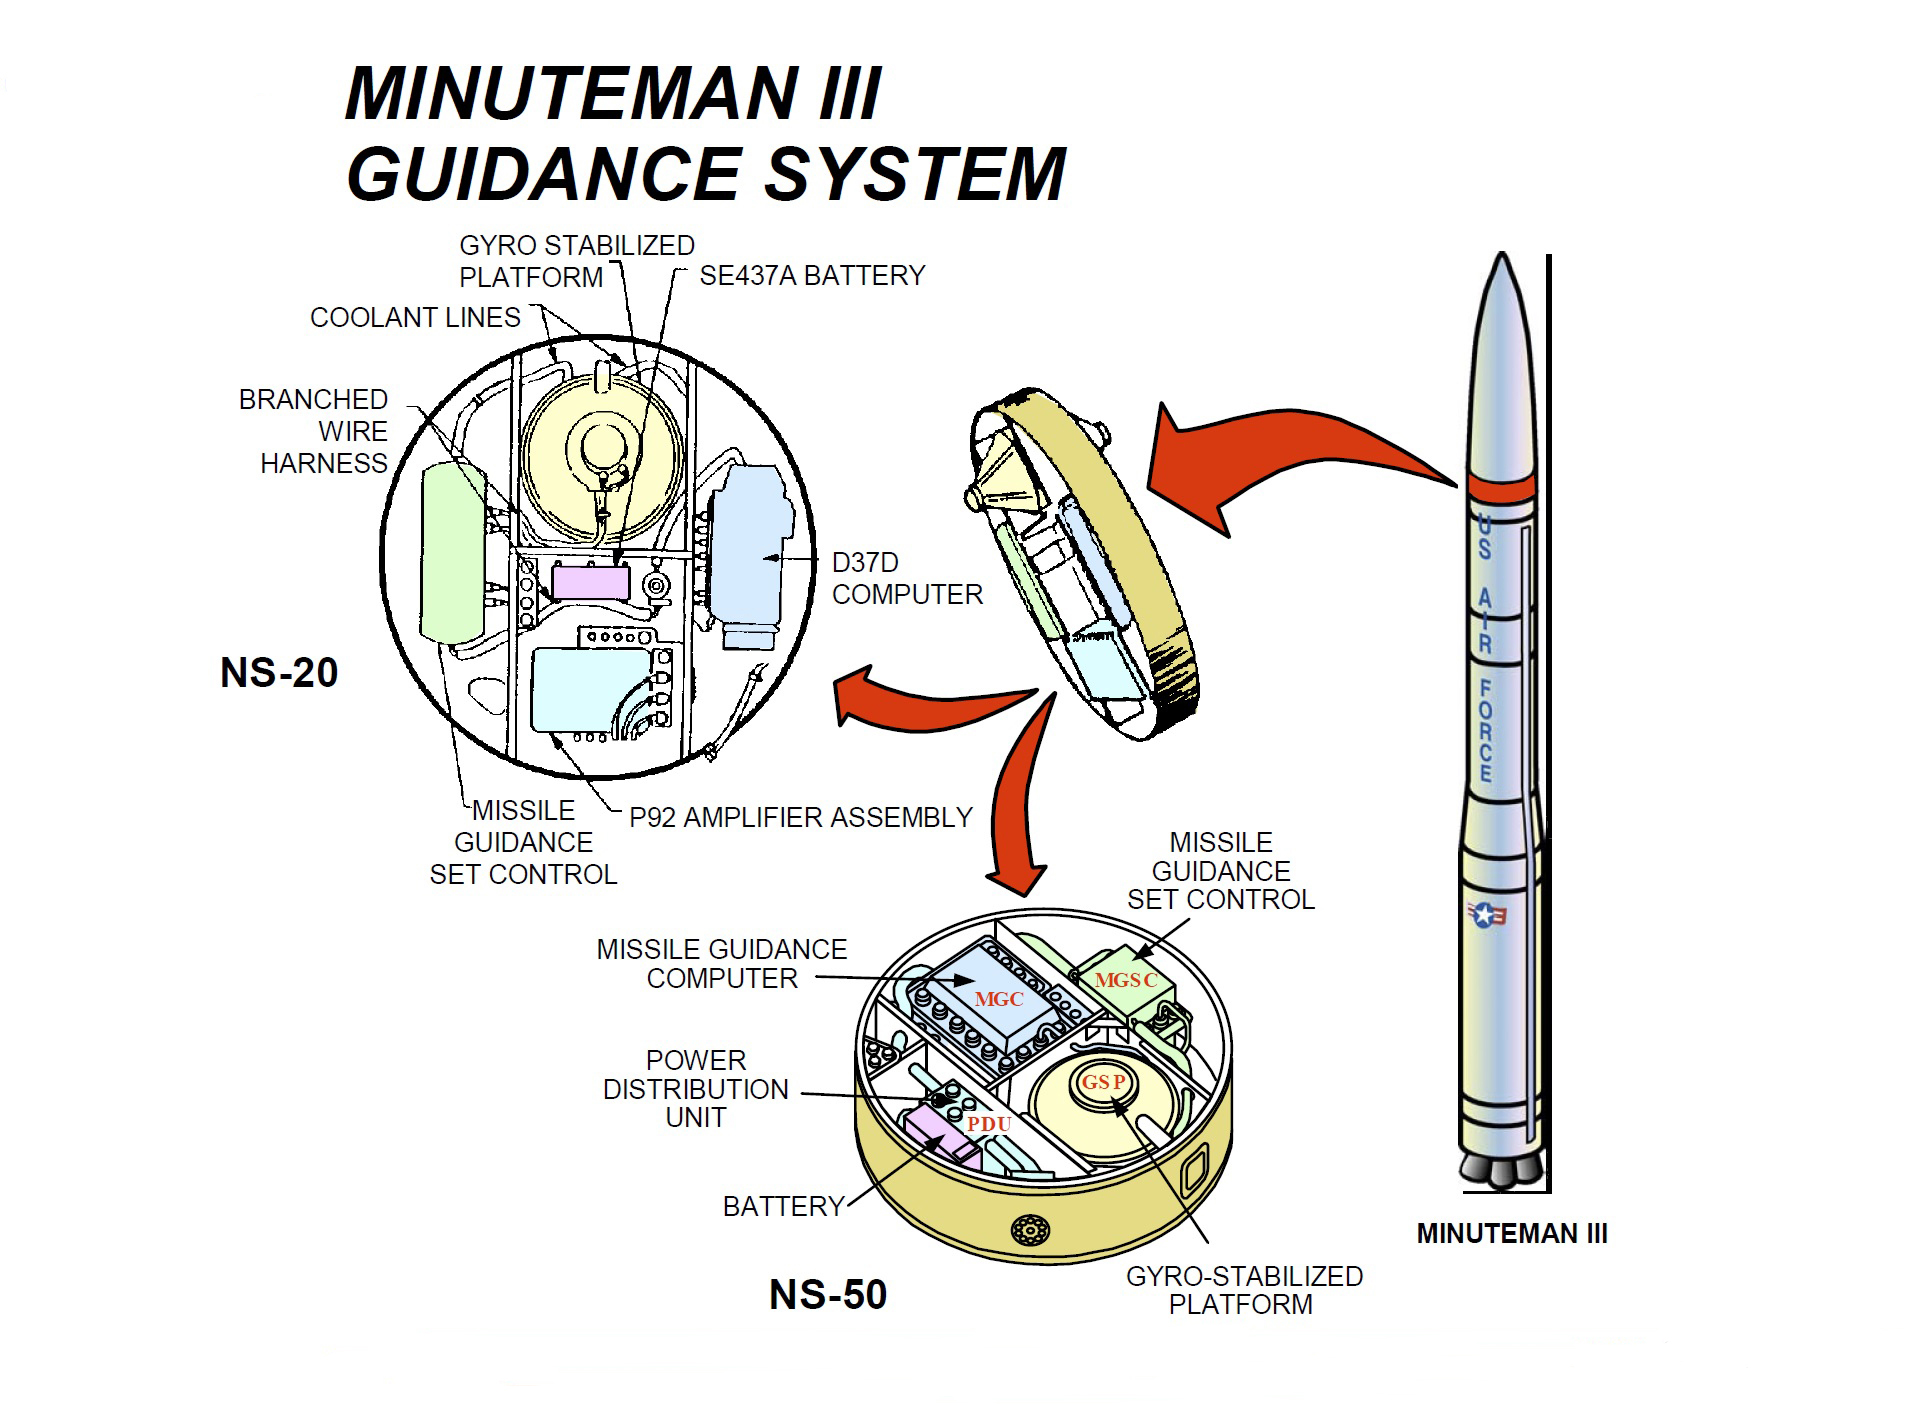 MinutemanIIIGuidanceSystemB.jpg